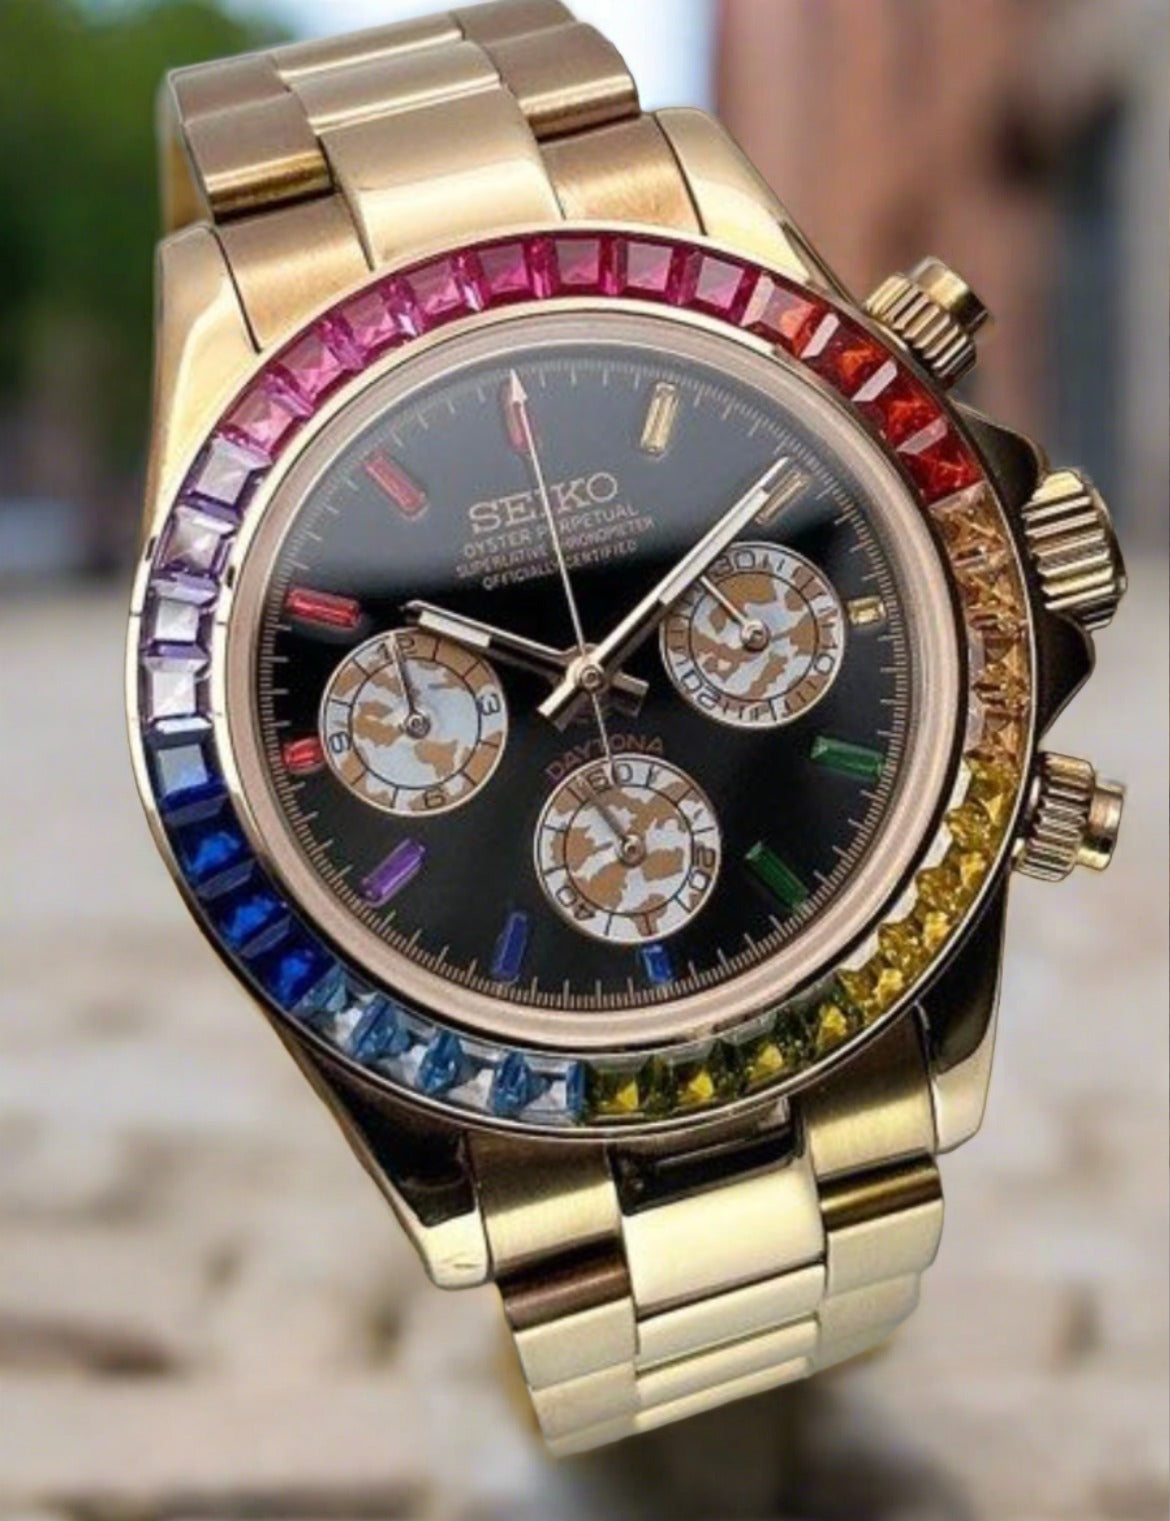 Seiko mod rainbow Rosegold meca-quartz VK63 chronograph watch